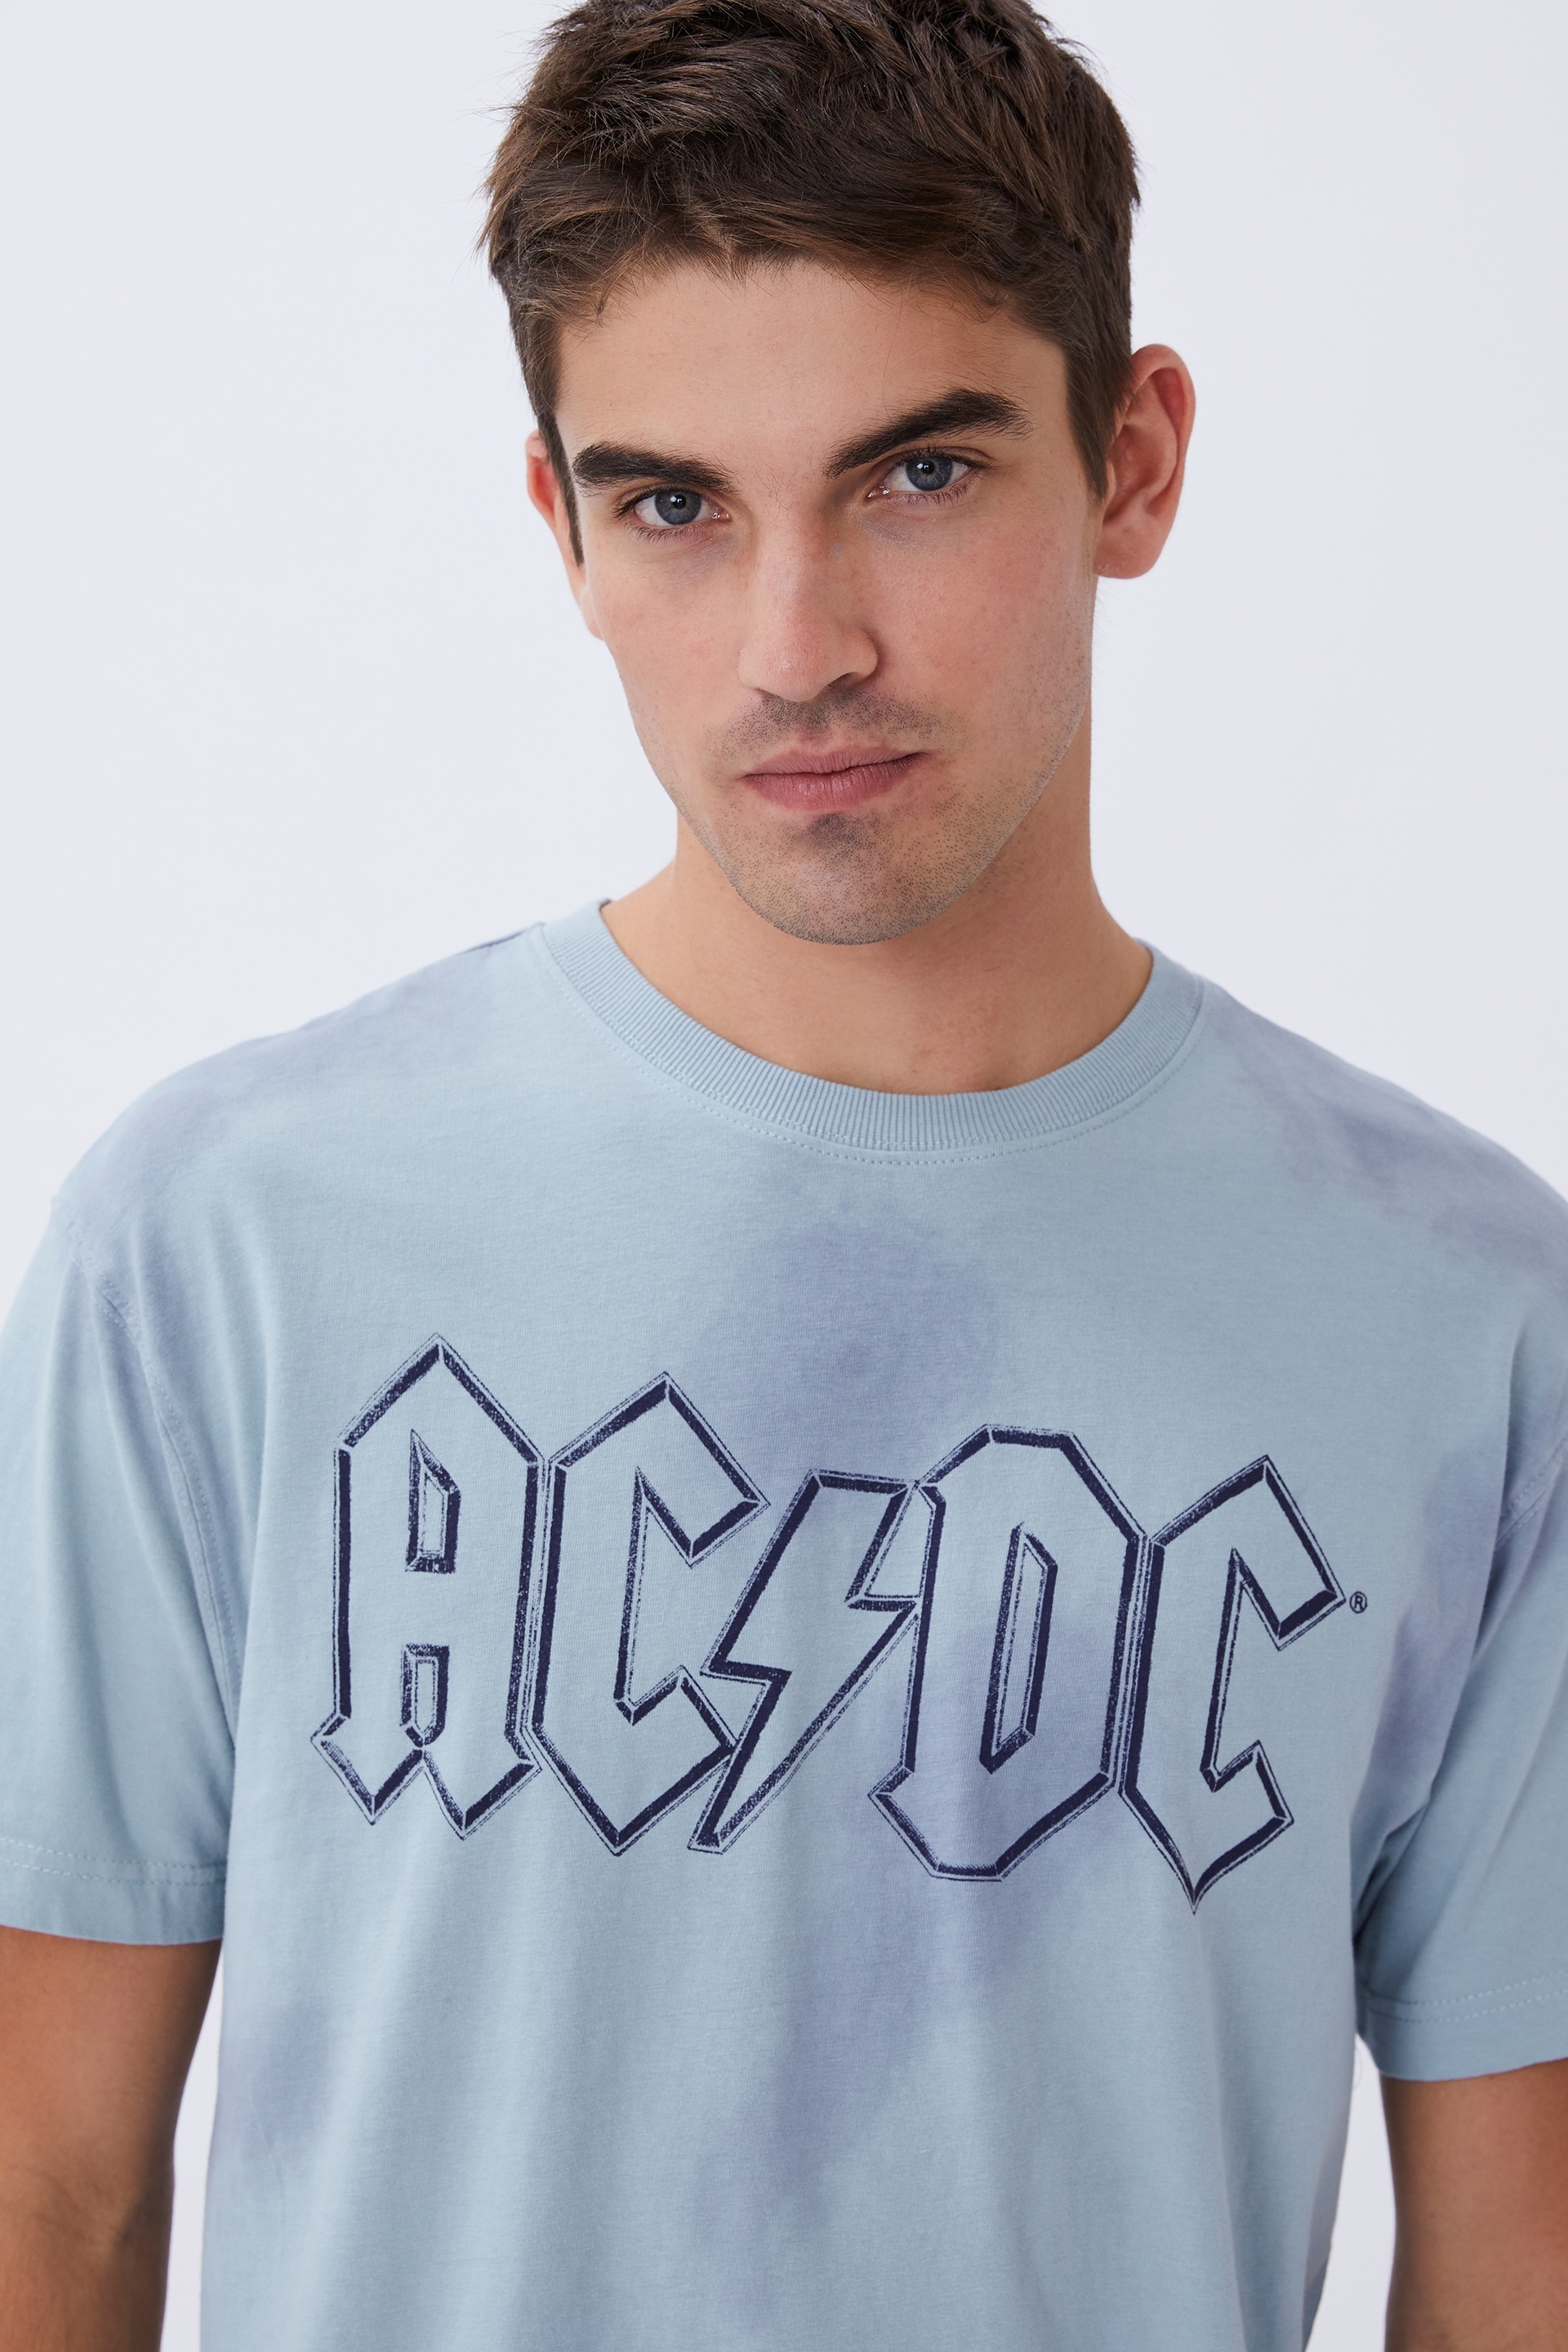 ac/dc t-shirt kid model:2 acdc shirt clothing kid Tshirt for children size:1-8 y